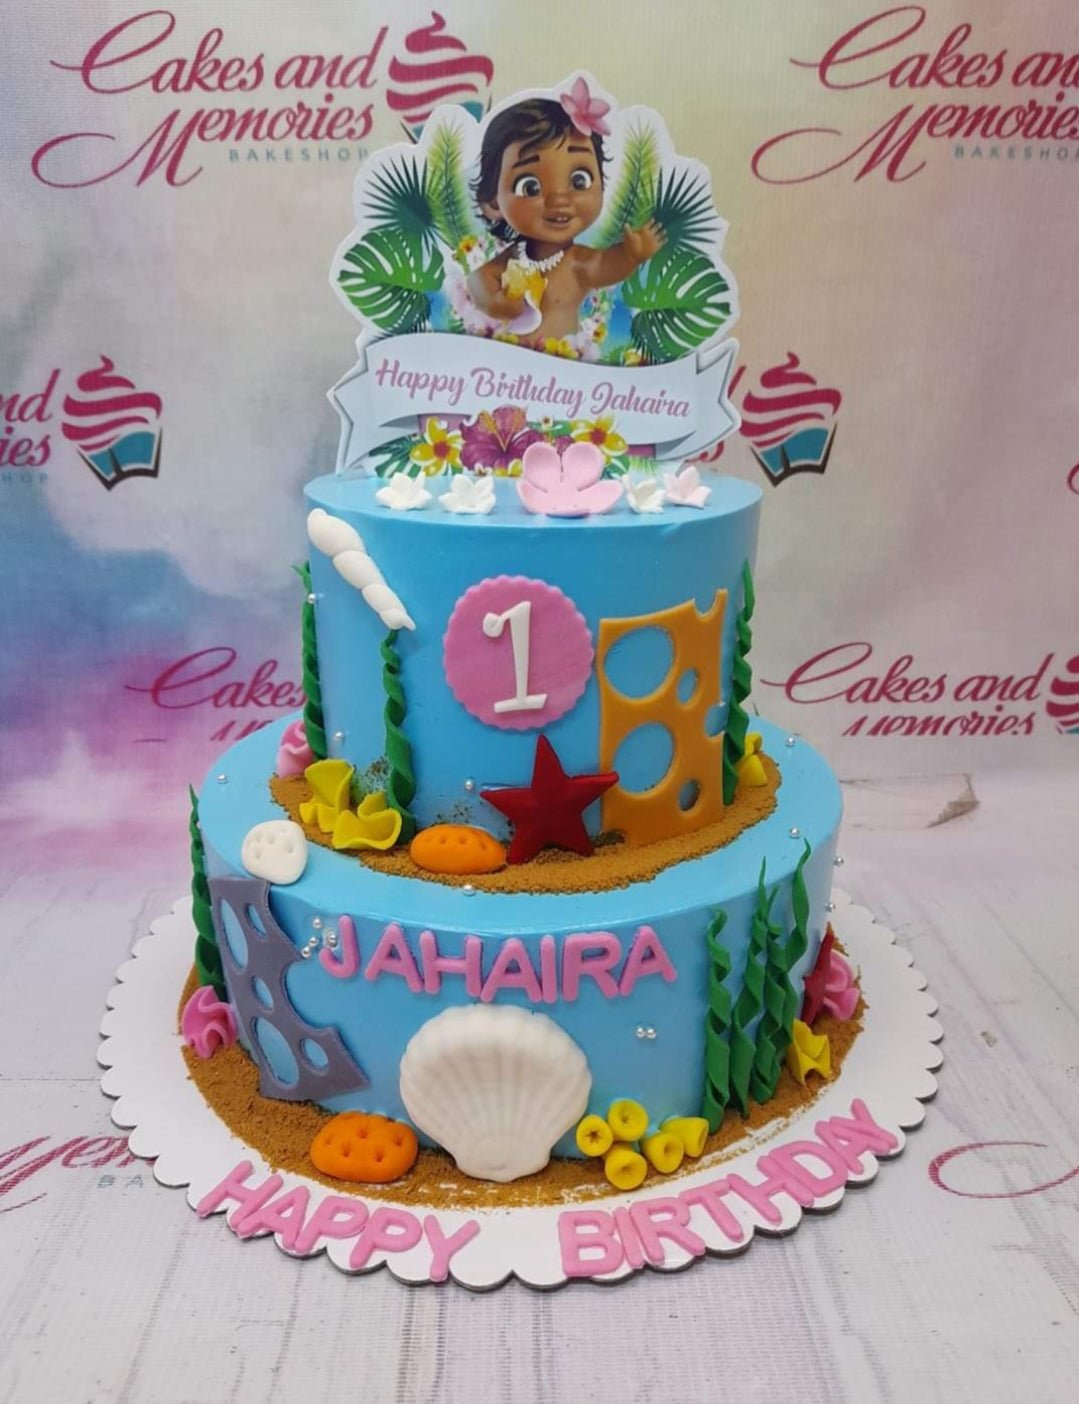 Cakeland Studio Inc - Moana Birthday Cake #cakestyle #🎂 #cakegram  #disneymovies #moanacake #tropicalcake #moana #moanababy  #moanabirthdayparty #babymoana #caketrend #cakedesign #cakeofinsta  #southfloridacakes #girlscakes #partycake #seacake ...